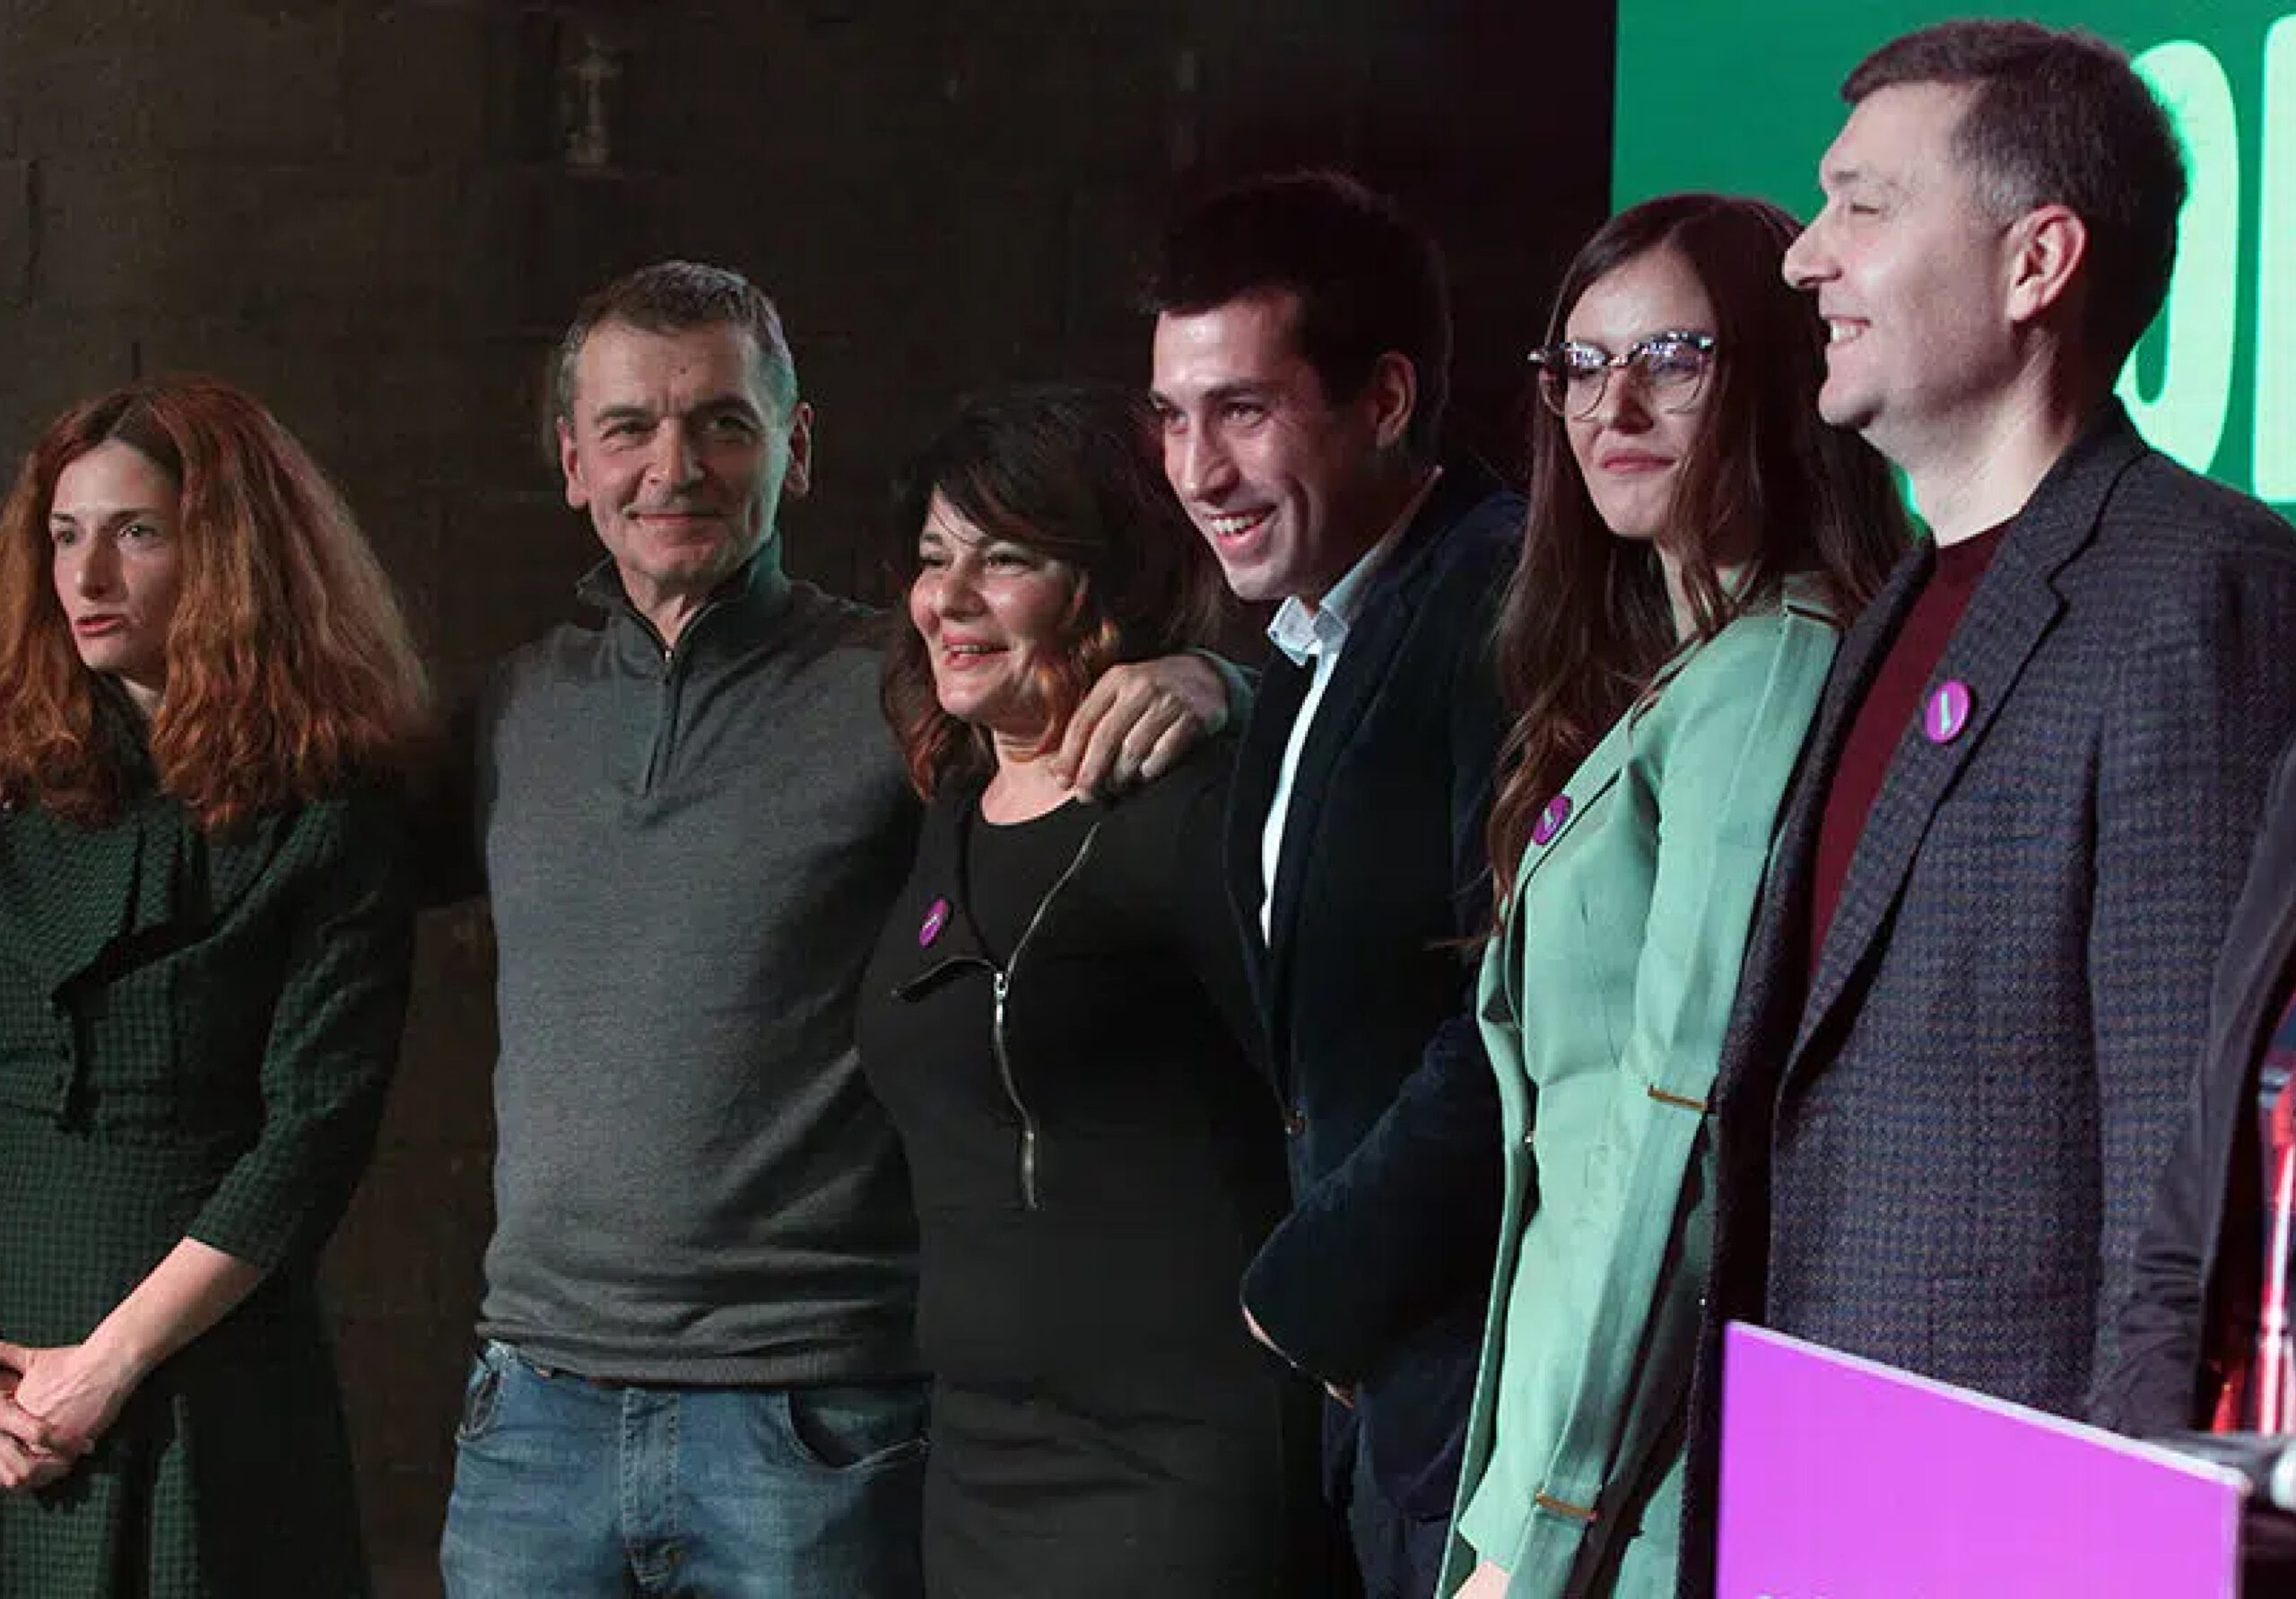 MORAMO - autentična zeleno-leva koalicija na političkoj sceni Srbije